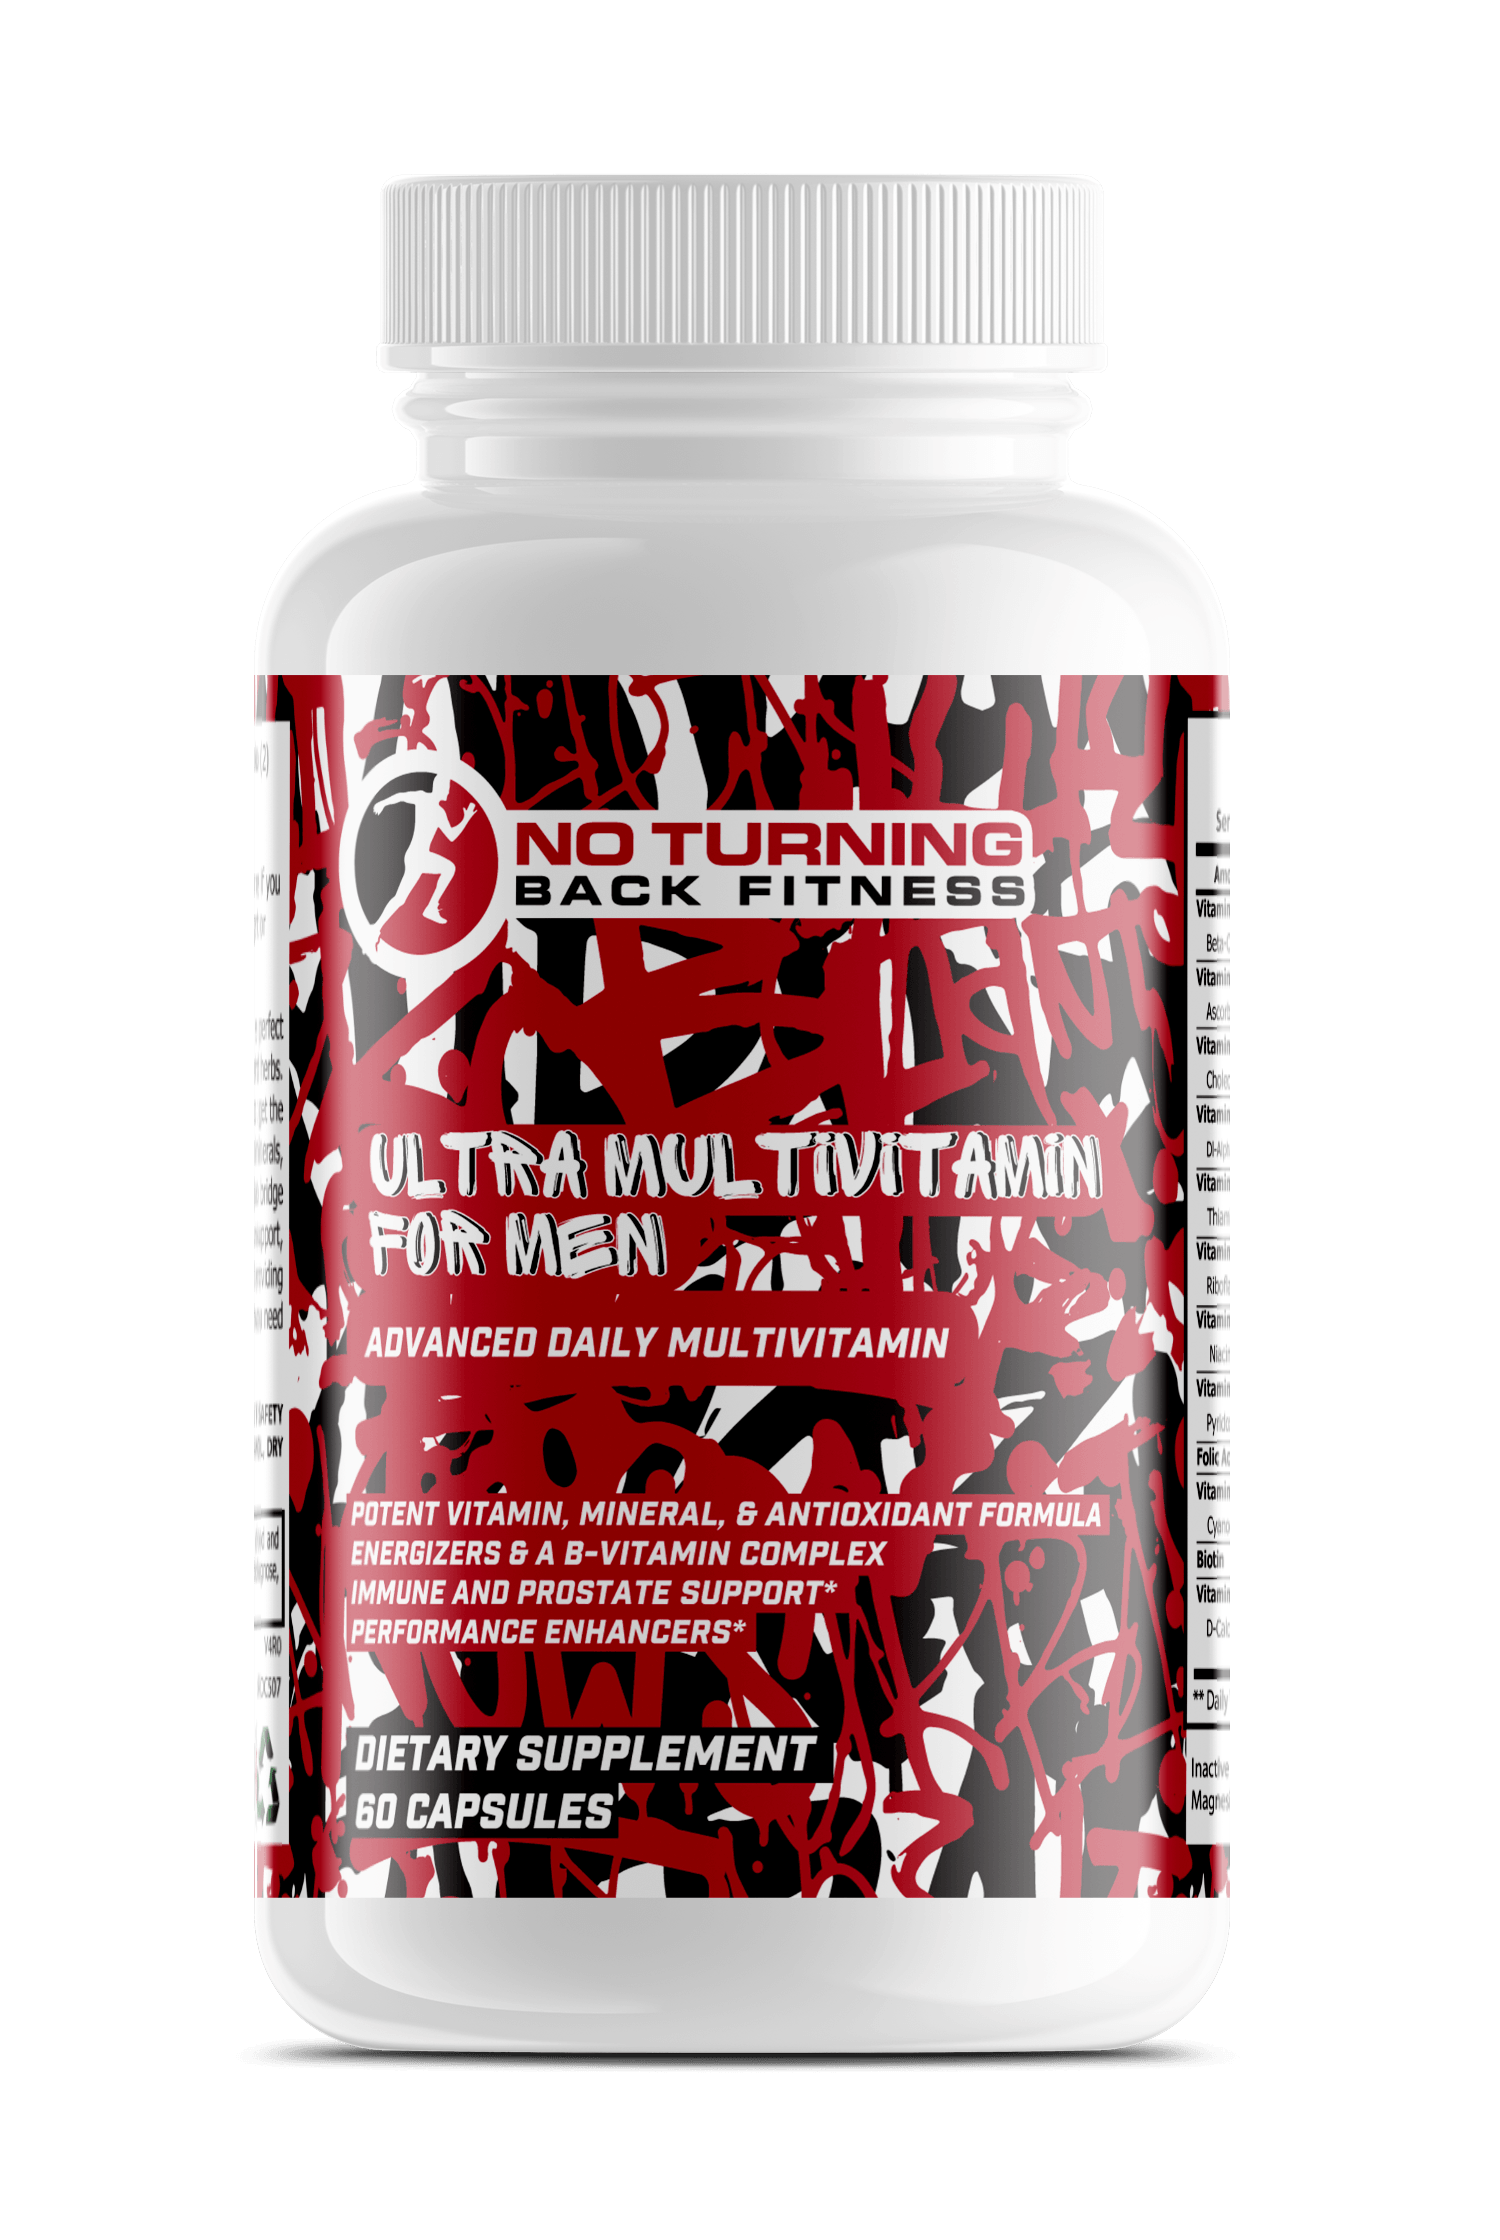 Ultra Multivitamin for Men - No Turning Back Fitness